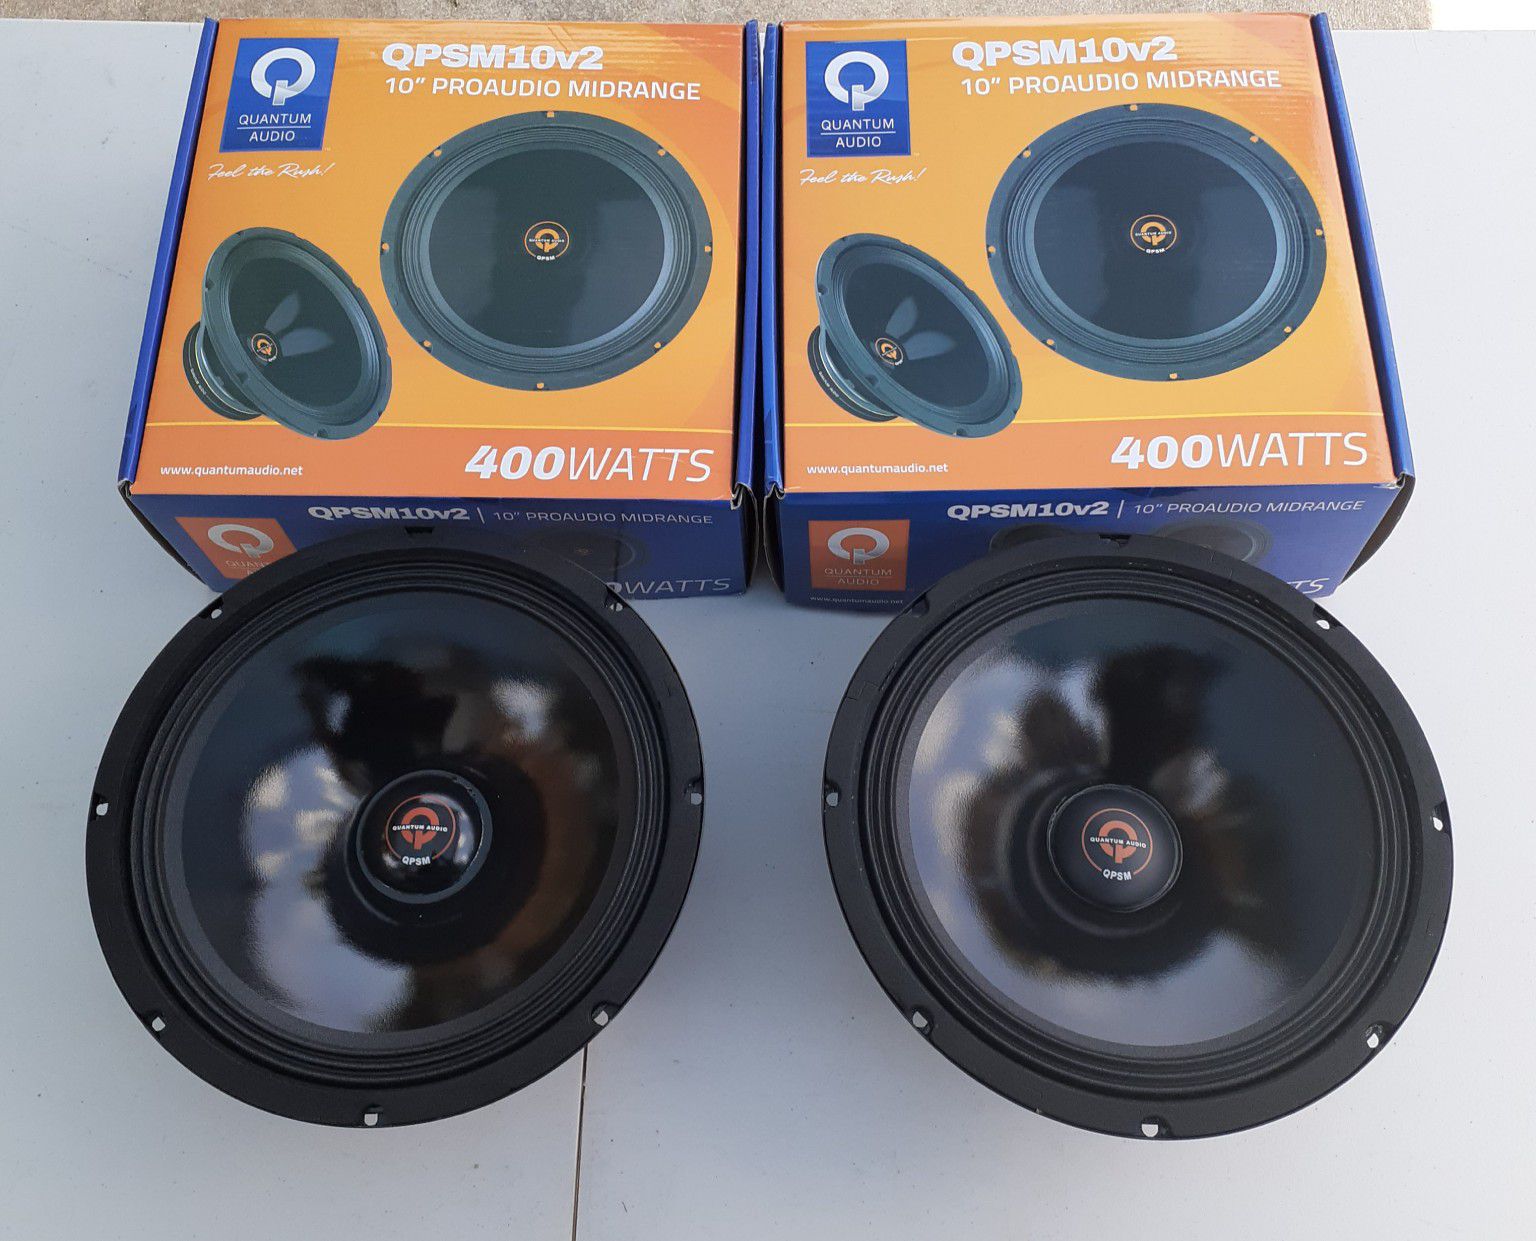 NEW! 10in Pro- mid-range speakers (VOZ)